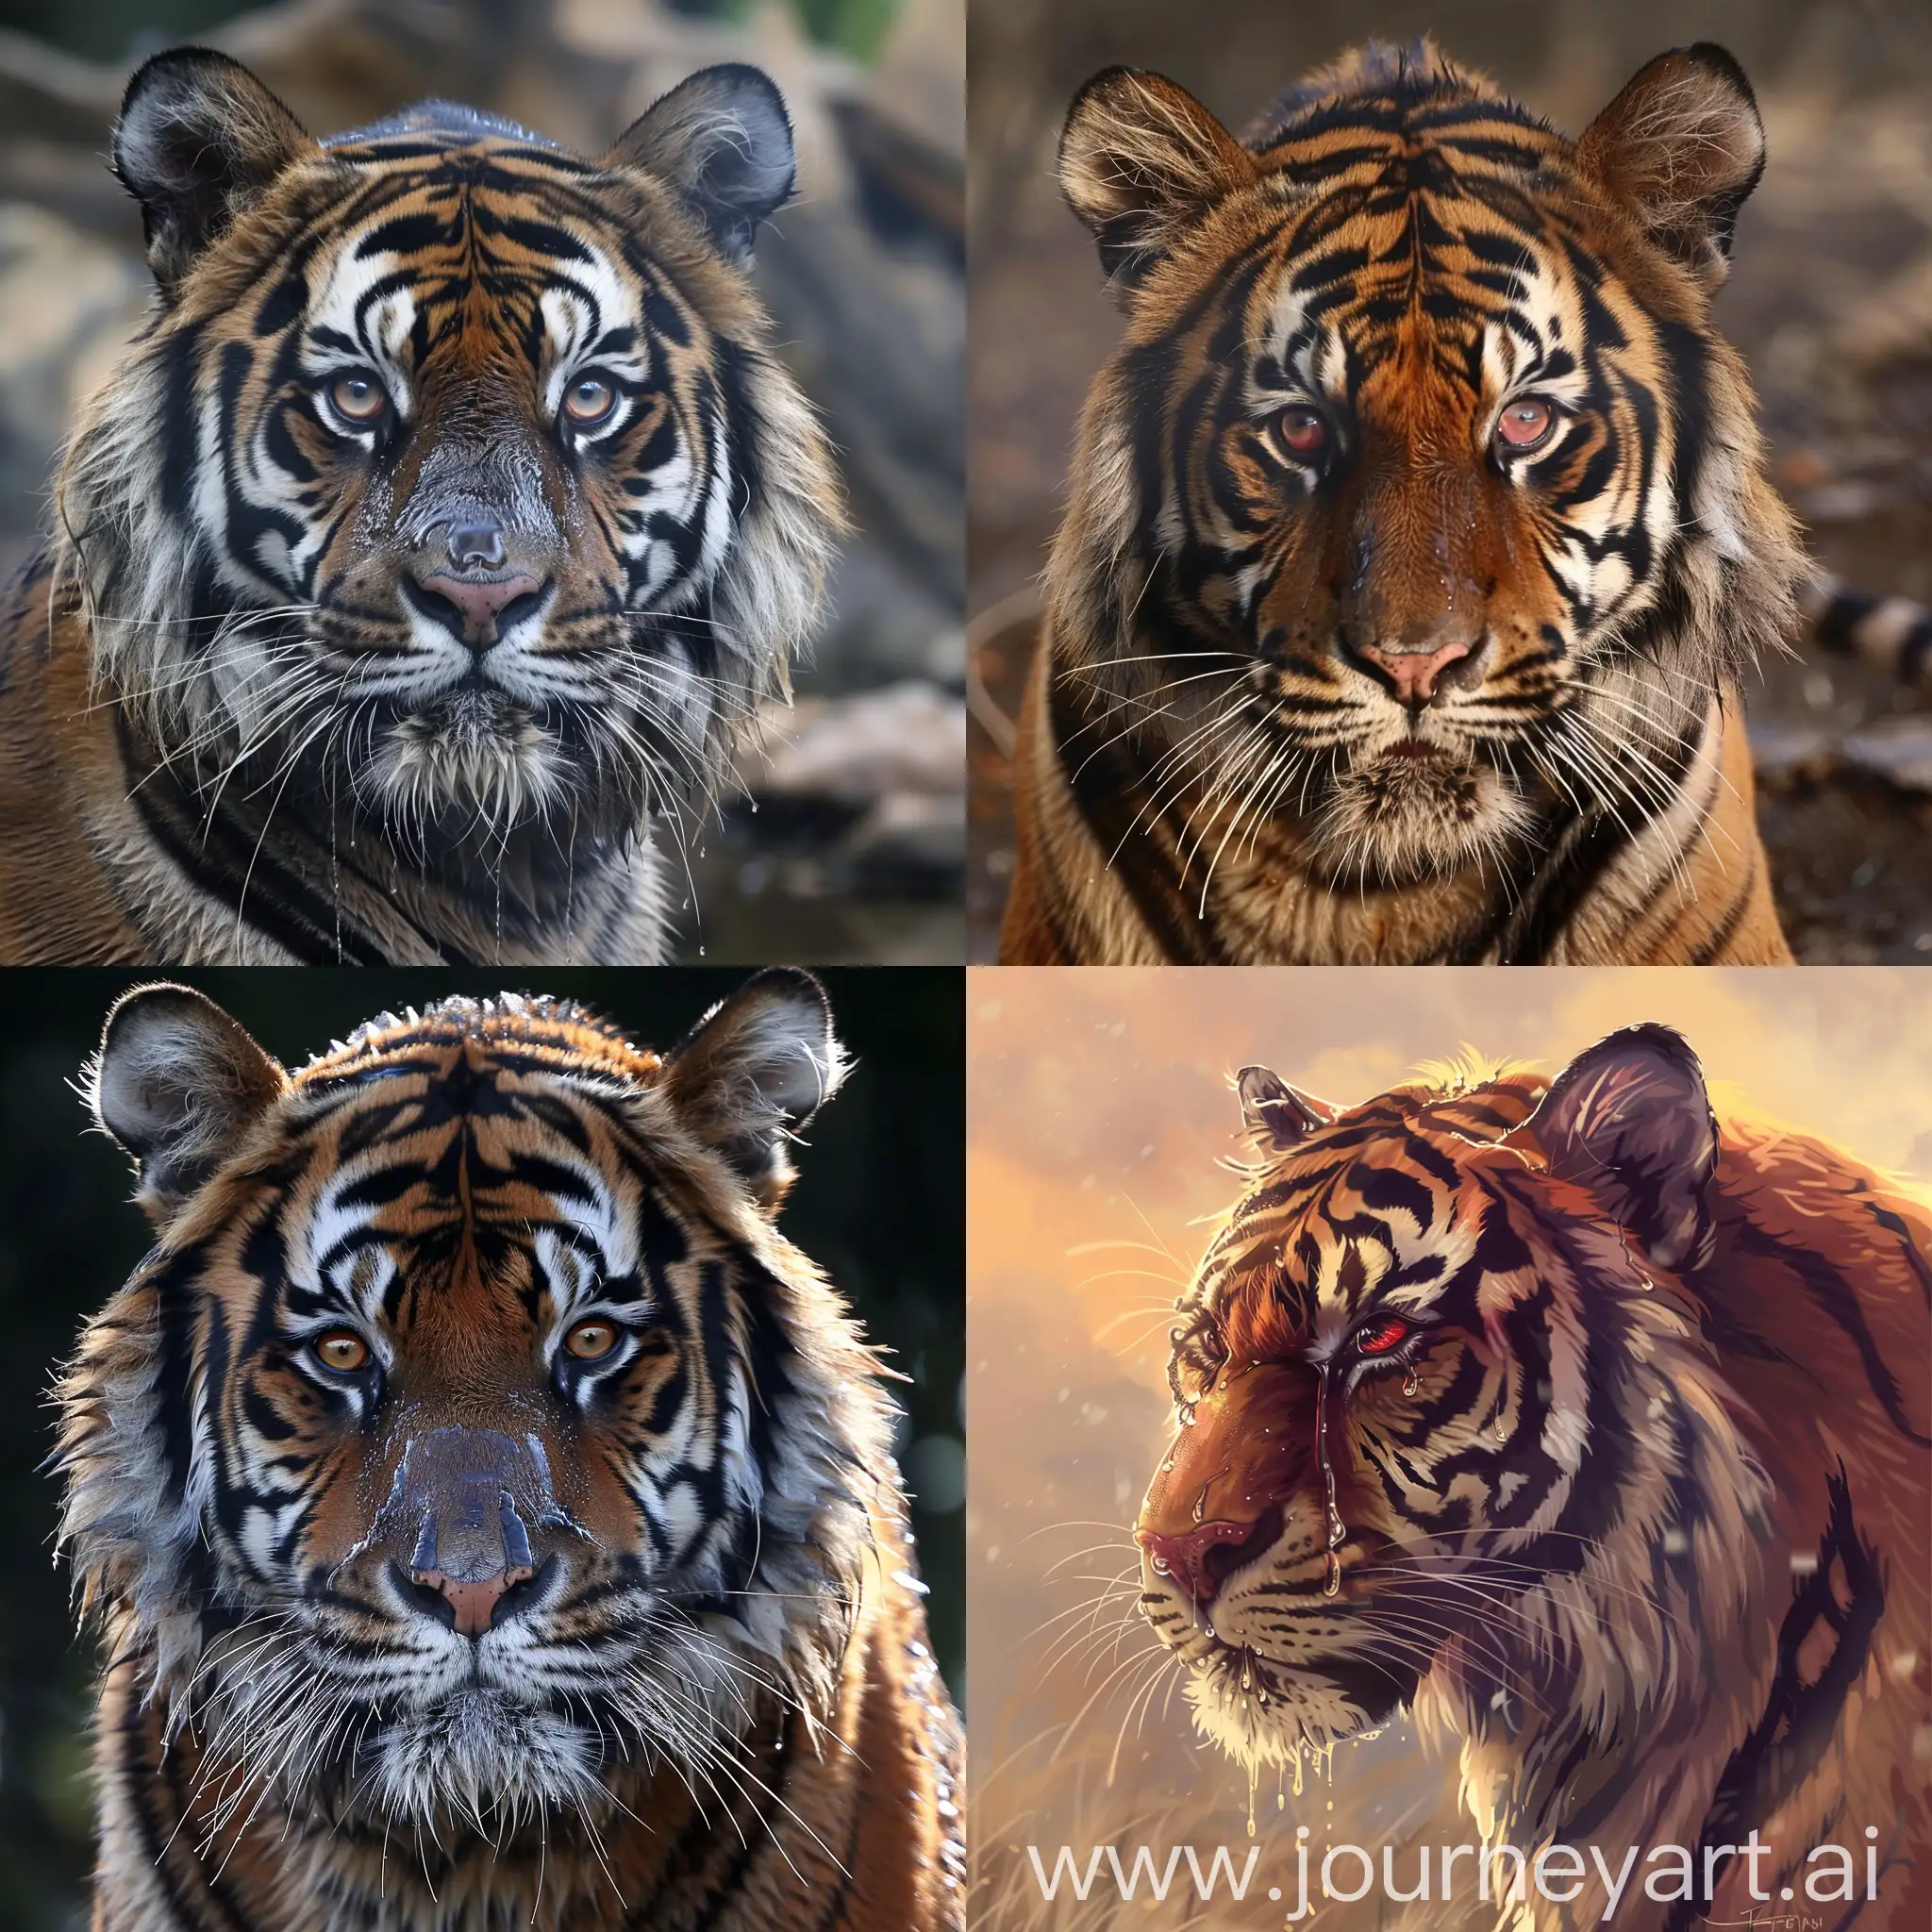 Sad-Royal-Bengal-Tiger-with-Teary-Eyes-Running